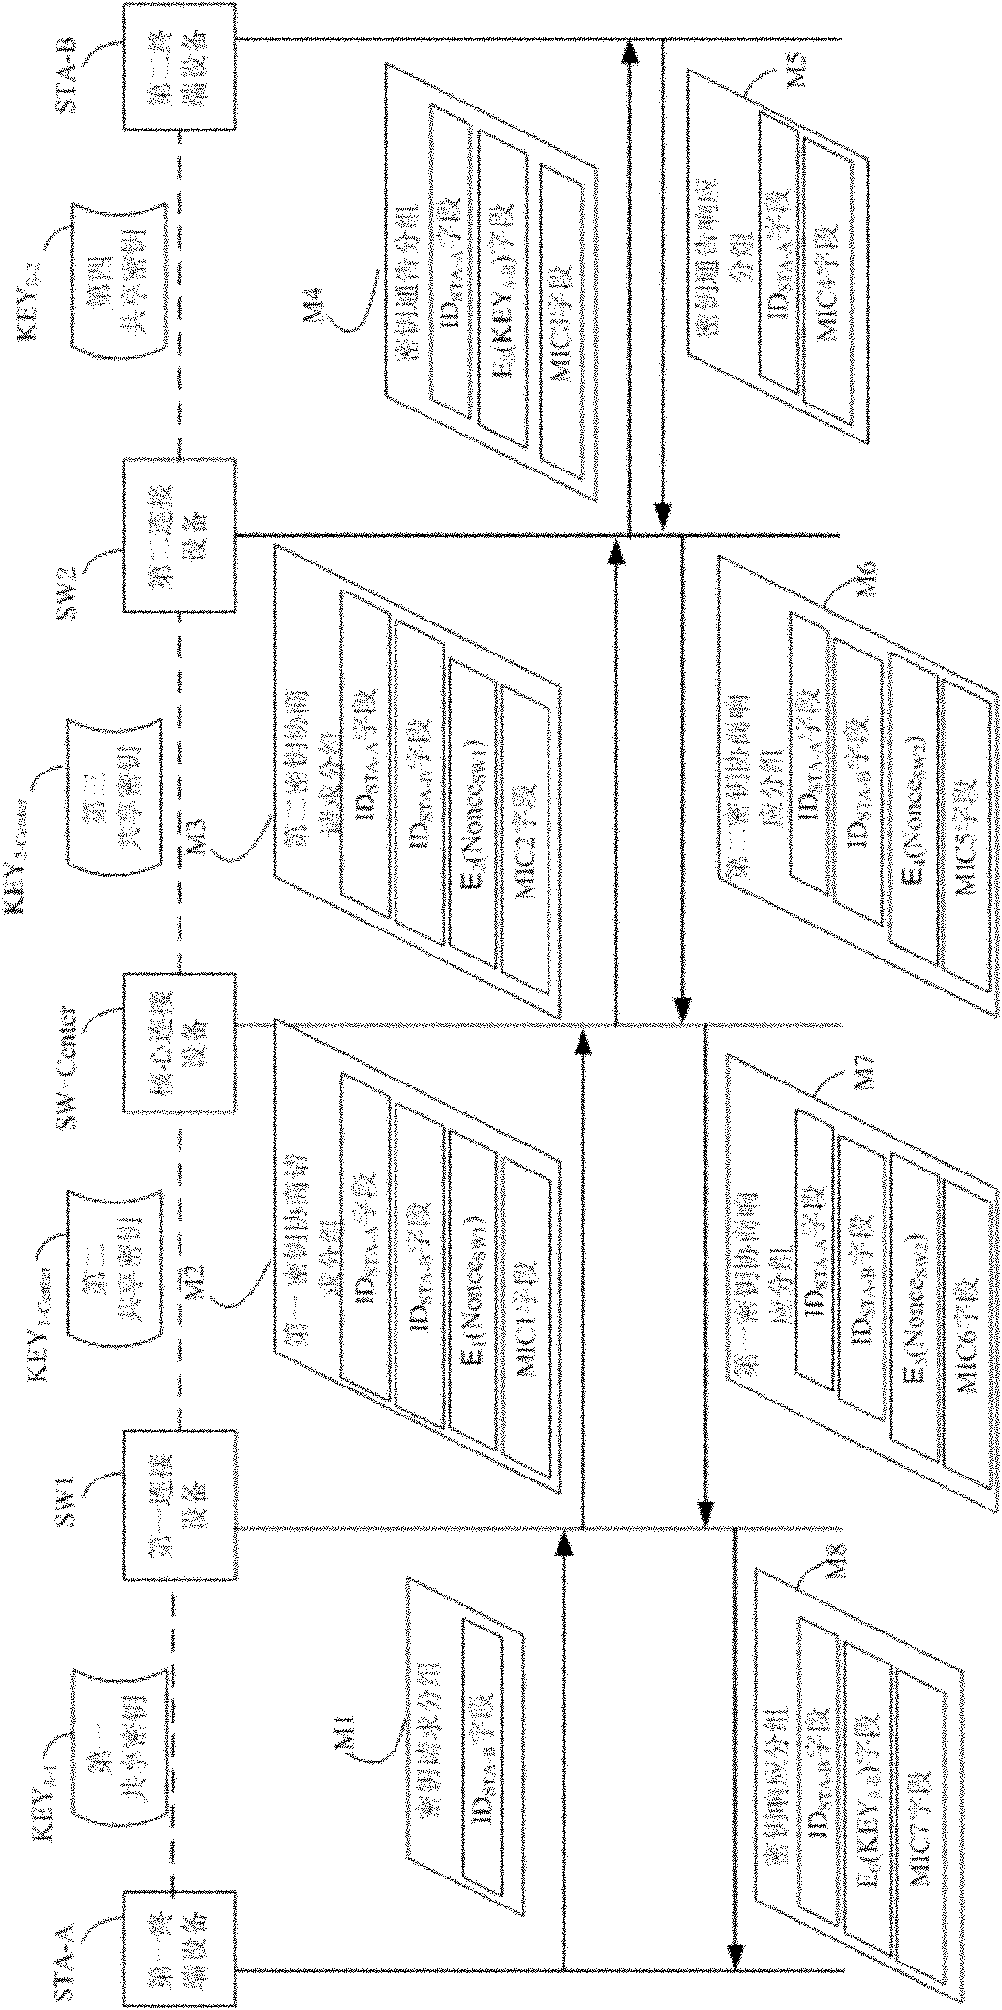 System and method for establishing session key between nodes